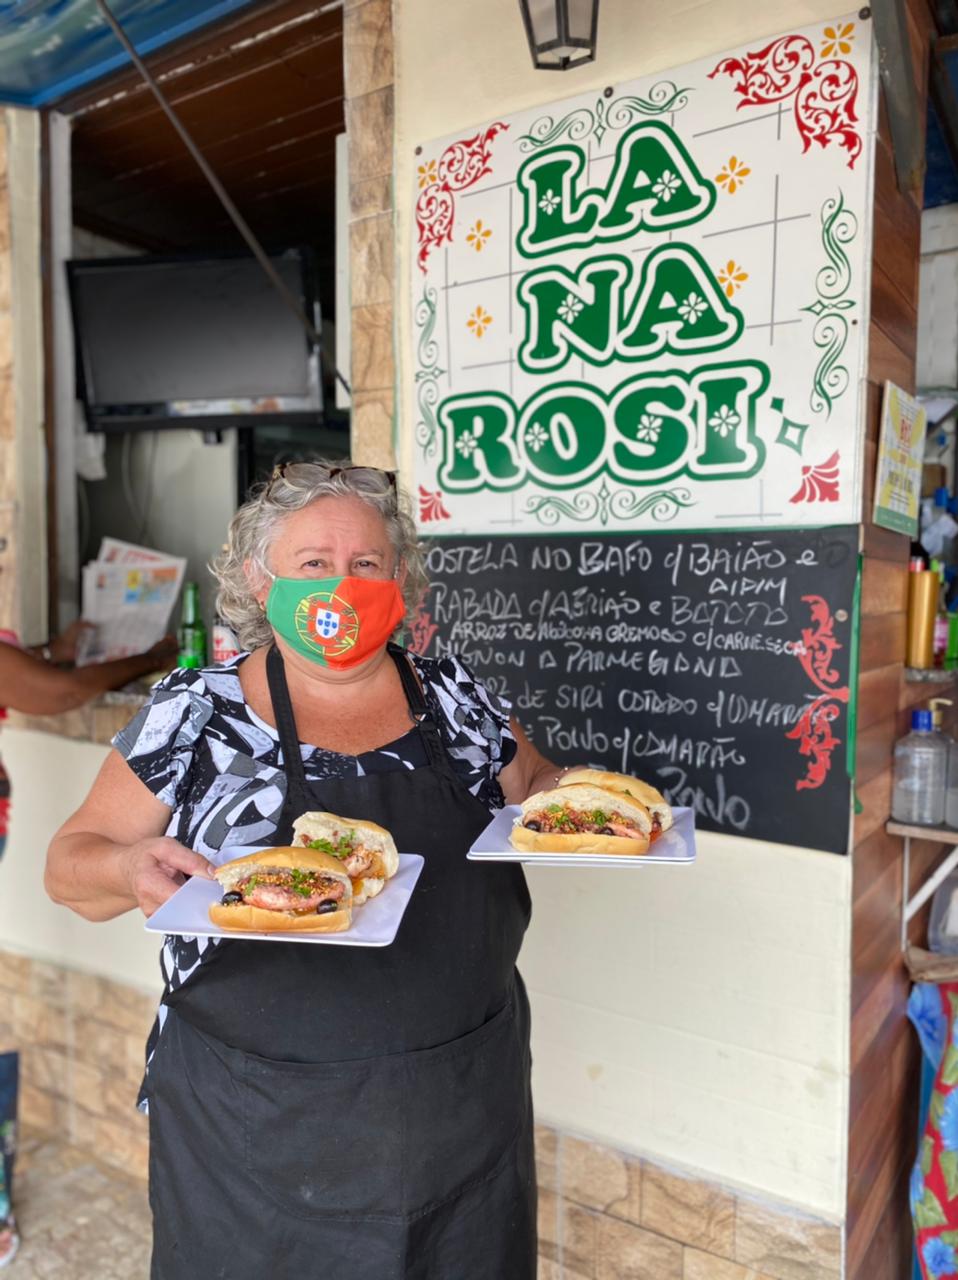 Rosi e seu hot dog de polvo: coisa de louco no quiosque da beira do mangue